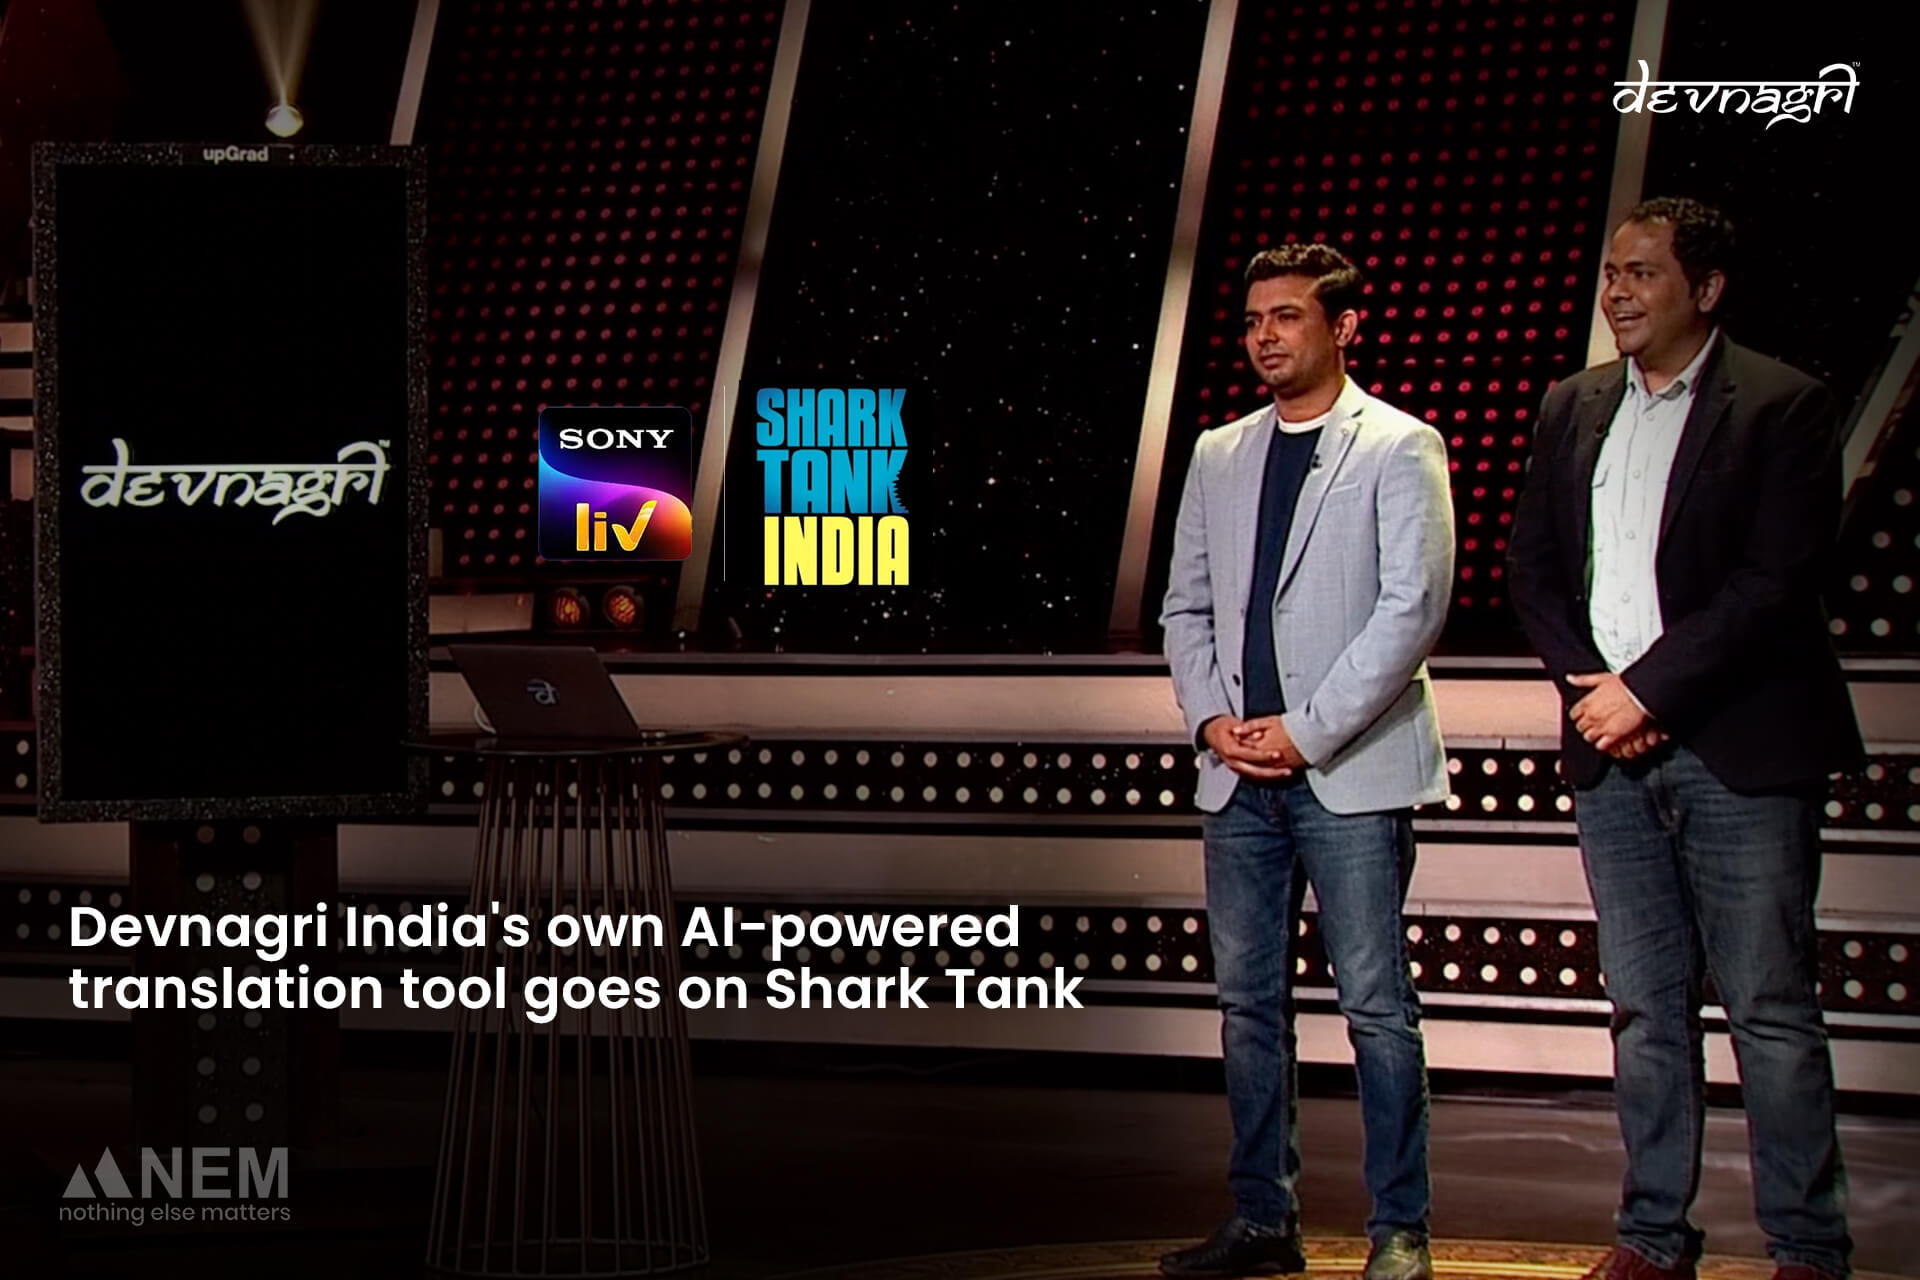 Devnagri India’s own AI-powered translation tool goes on Shark Tank